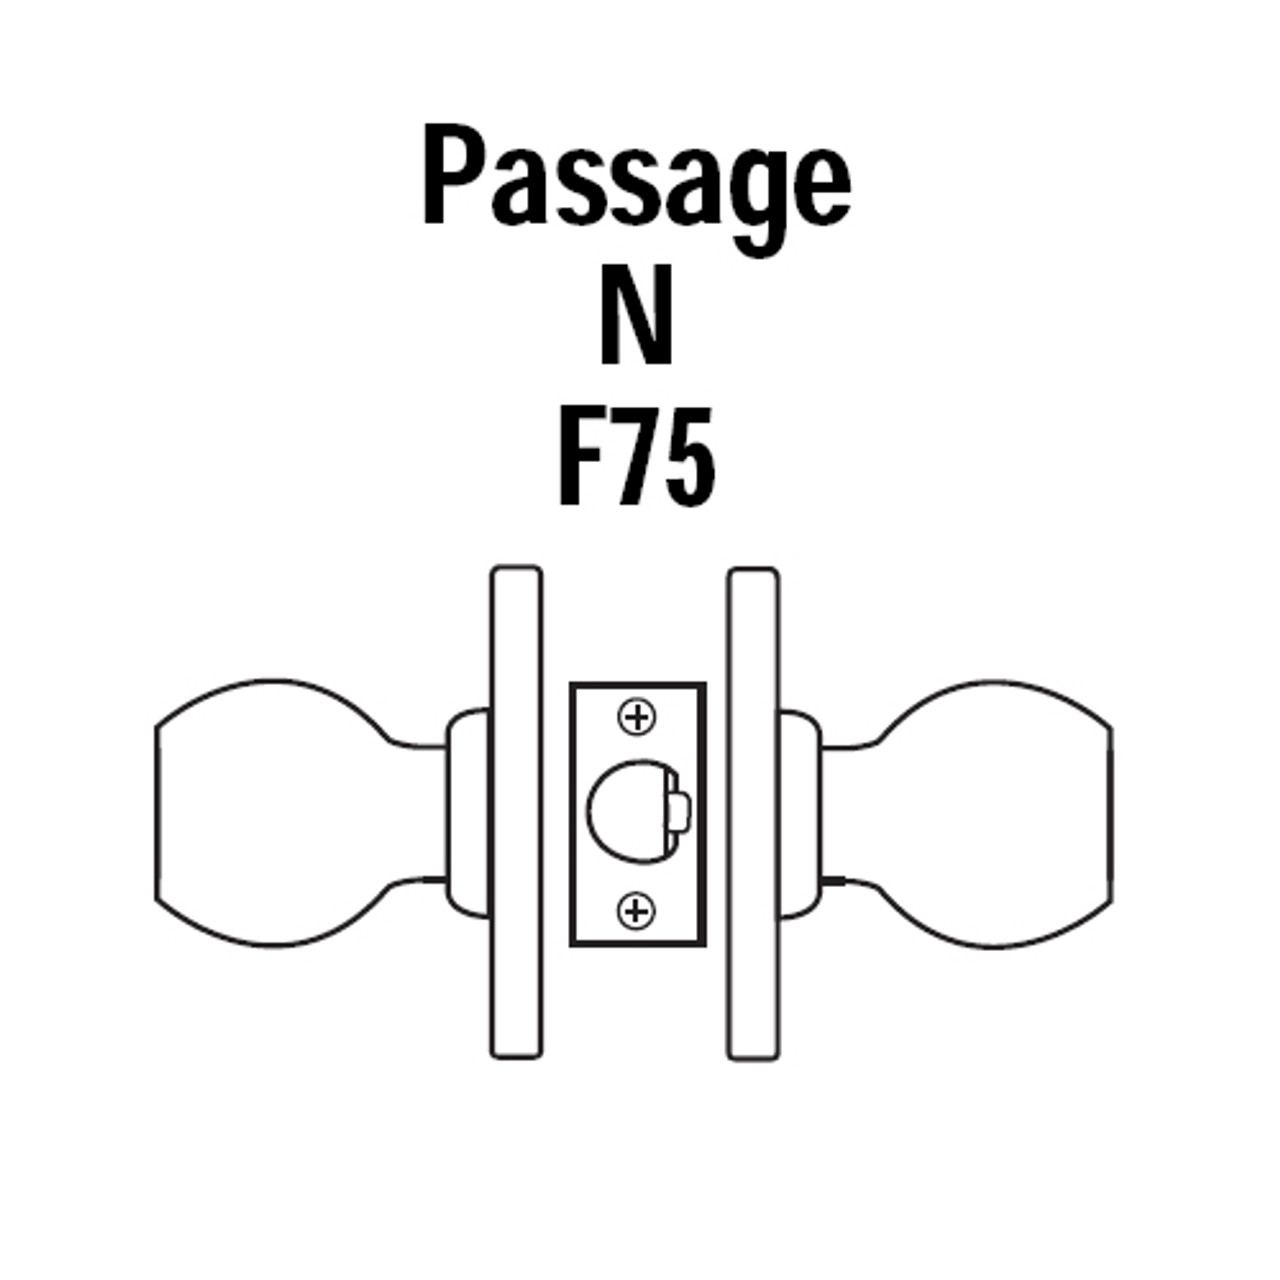 8K30N6CSTK626 Best 8K Series Passage Heavy Duty Cylindrical Knob Locks with Tulip Style in Satin Chrome